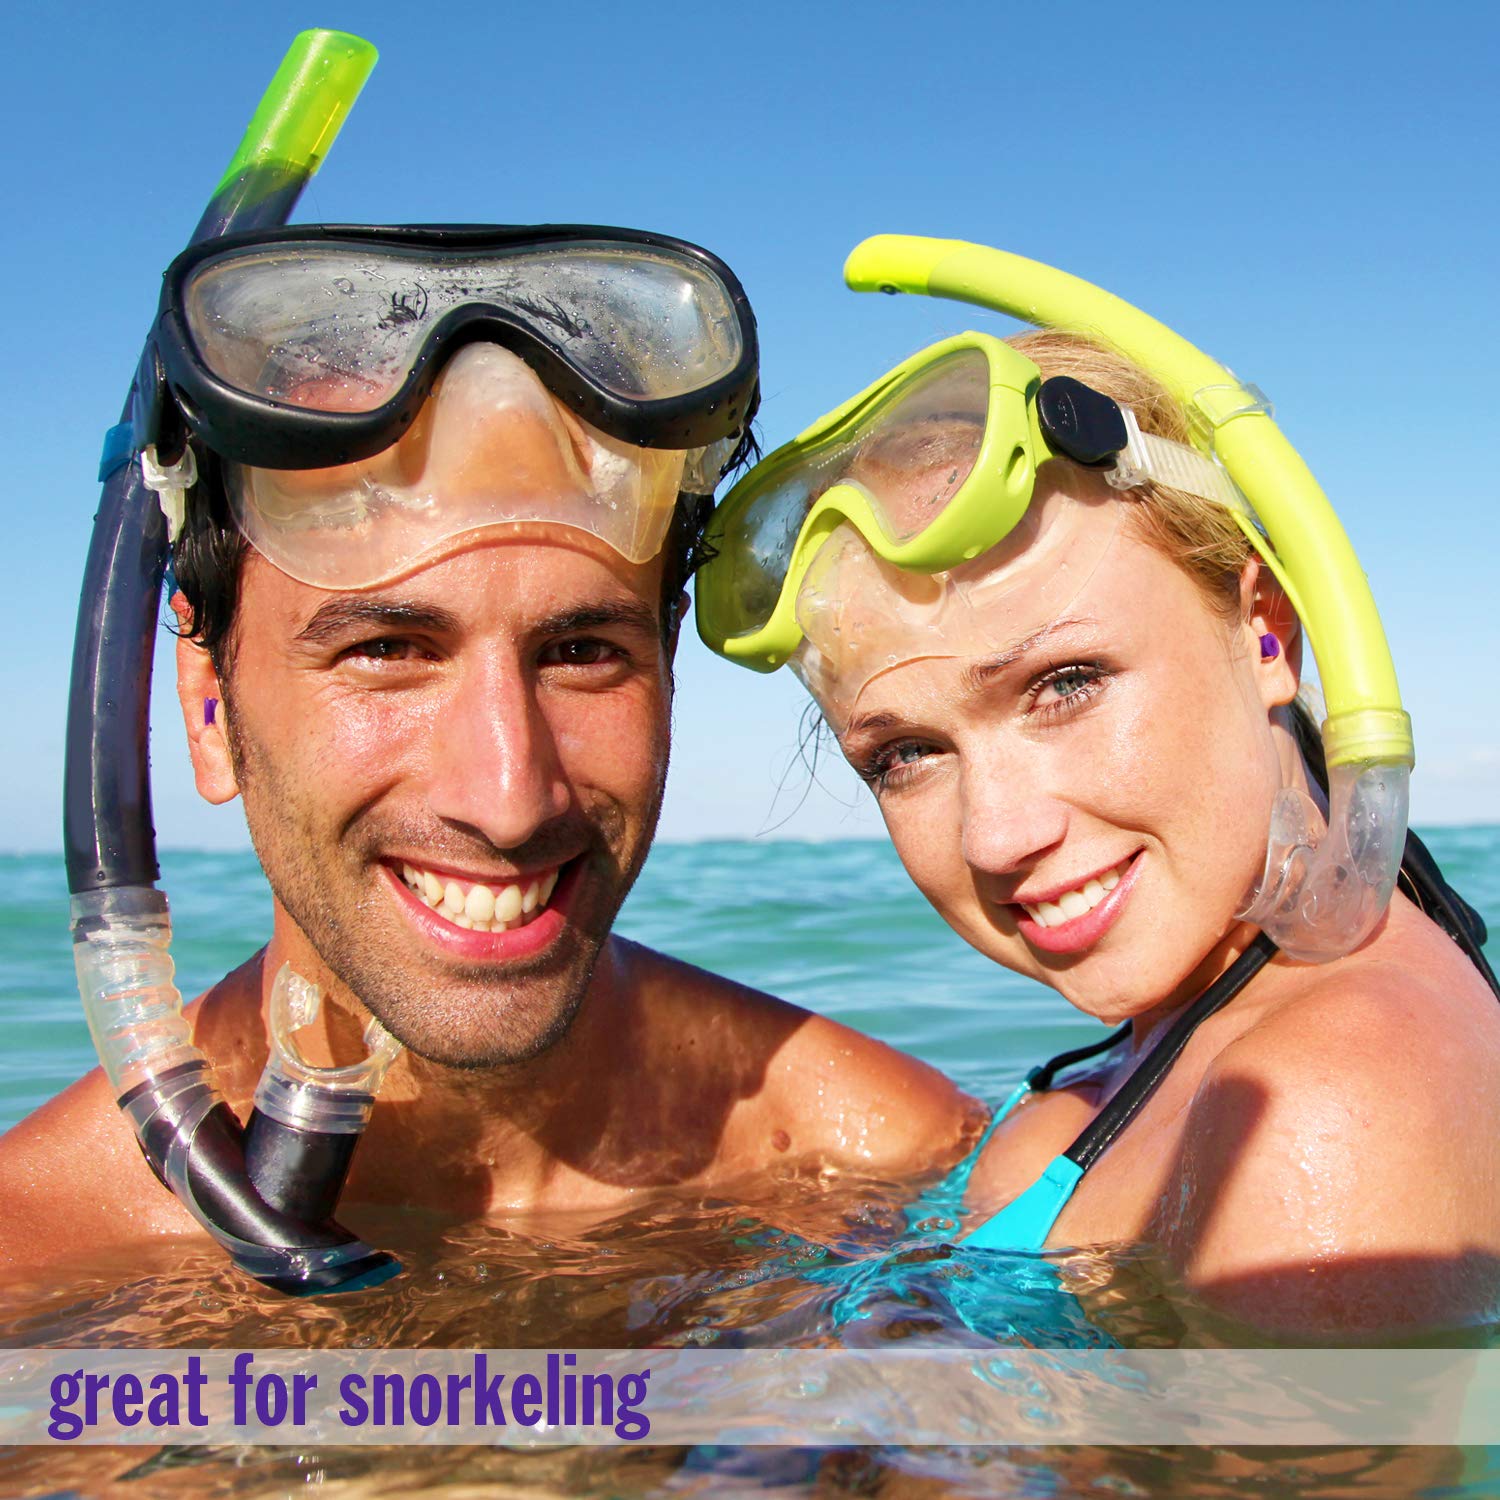 Mack's AquaBlock Swimming Earplugs - Comfortable, Waterproof, Reusable Silicone Ear Plugs for Swimming, Snorkeling, Showering, Surfing and Bathing